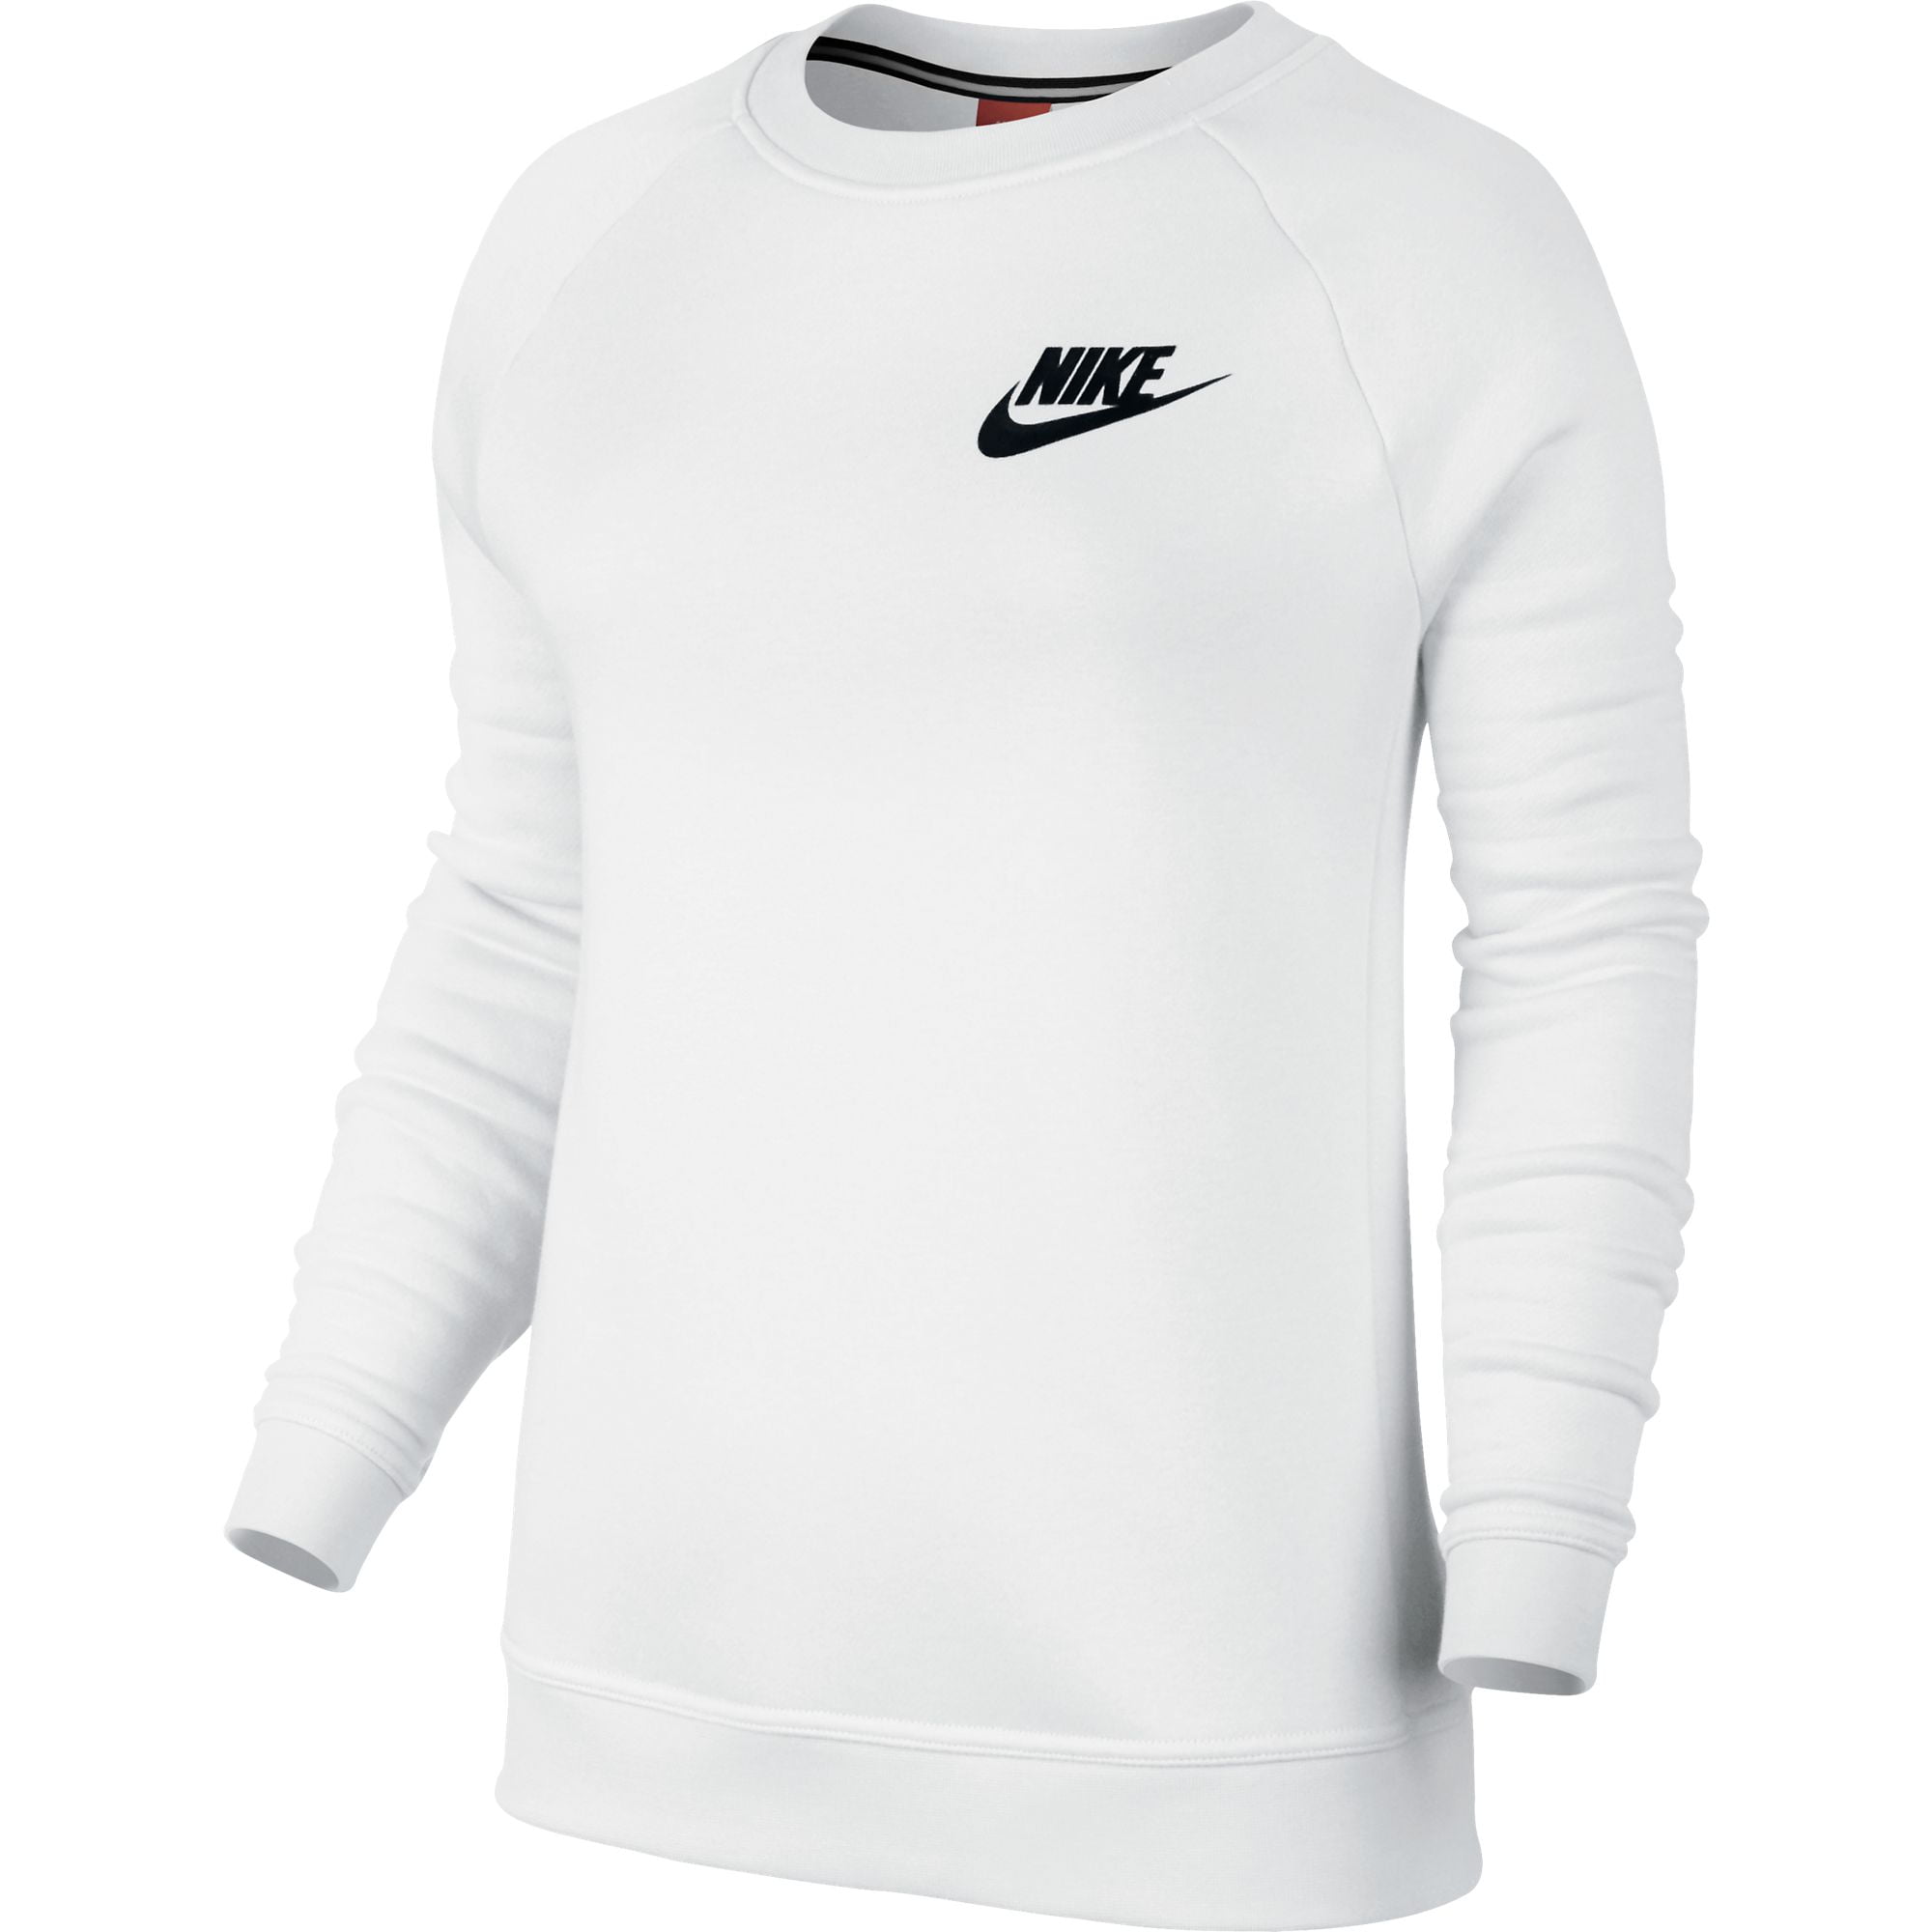 Nike Sportswear rally Crew White/Black 826662-100